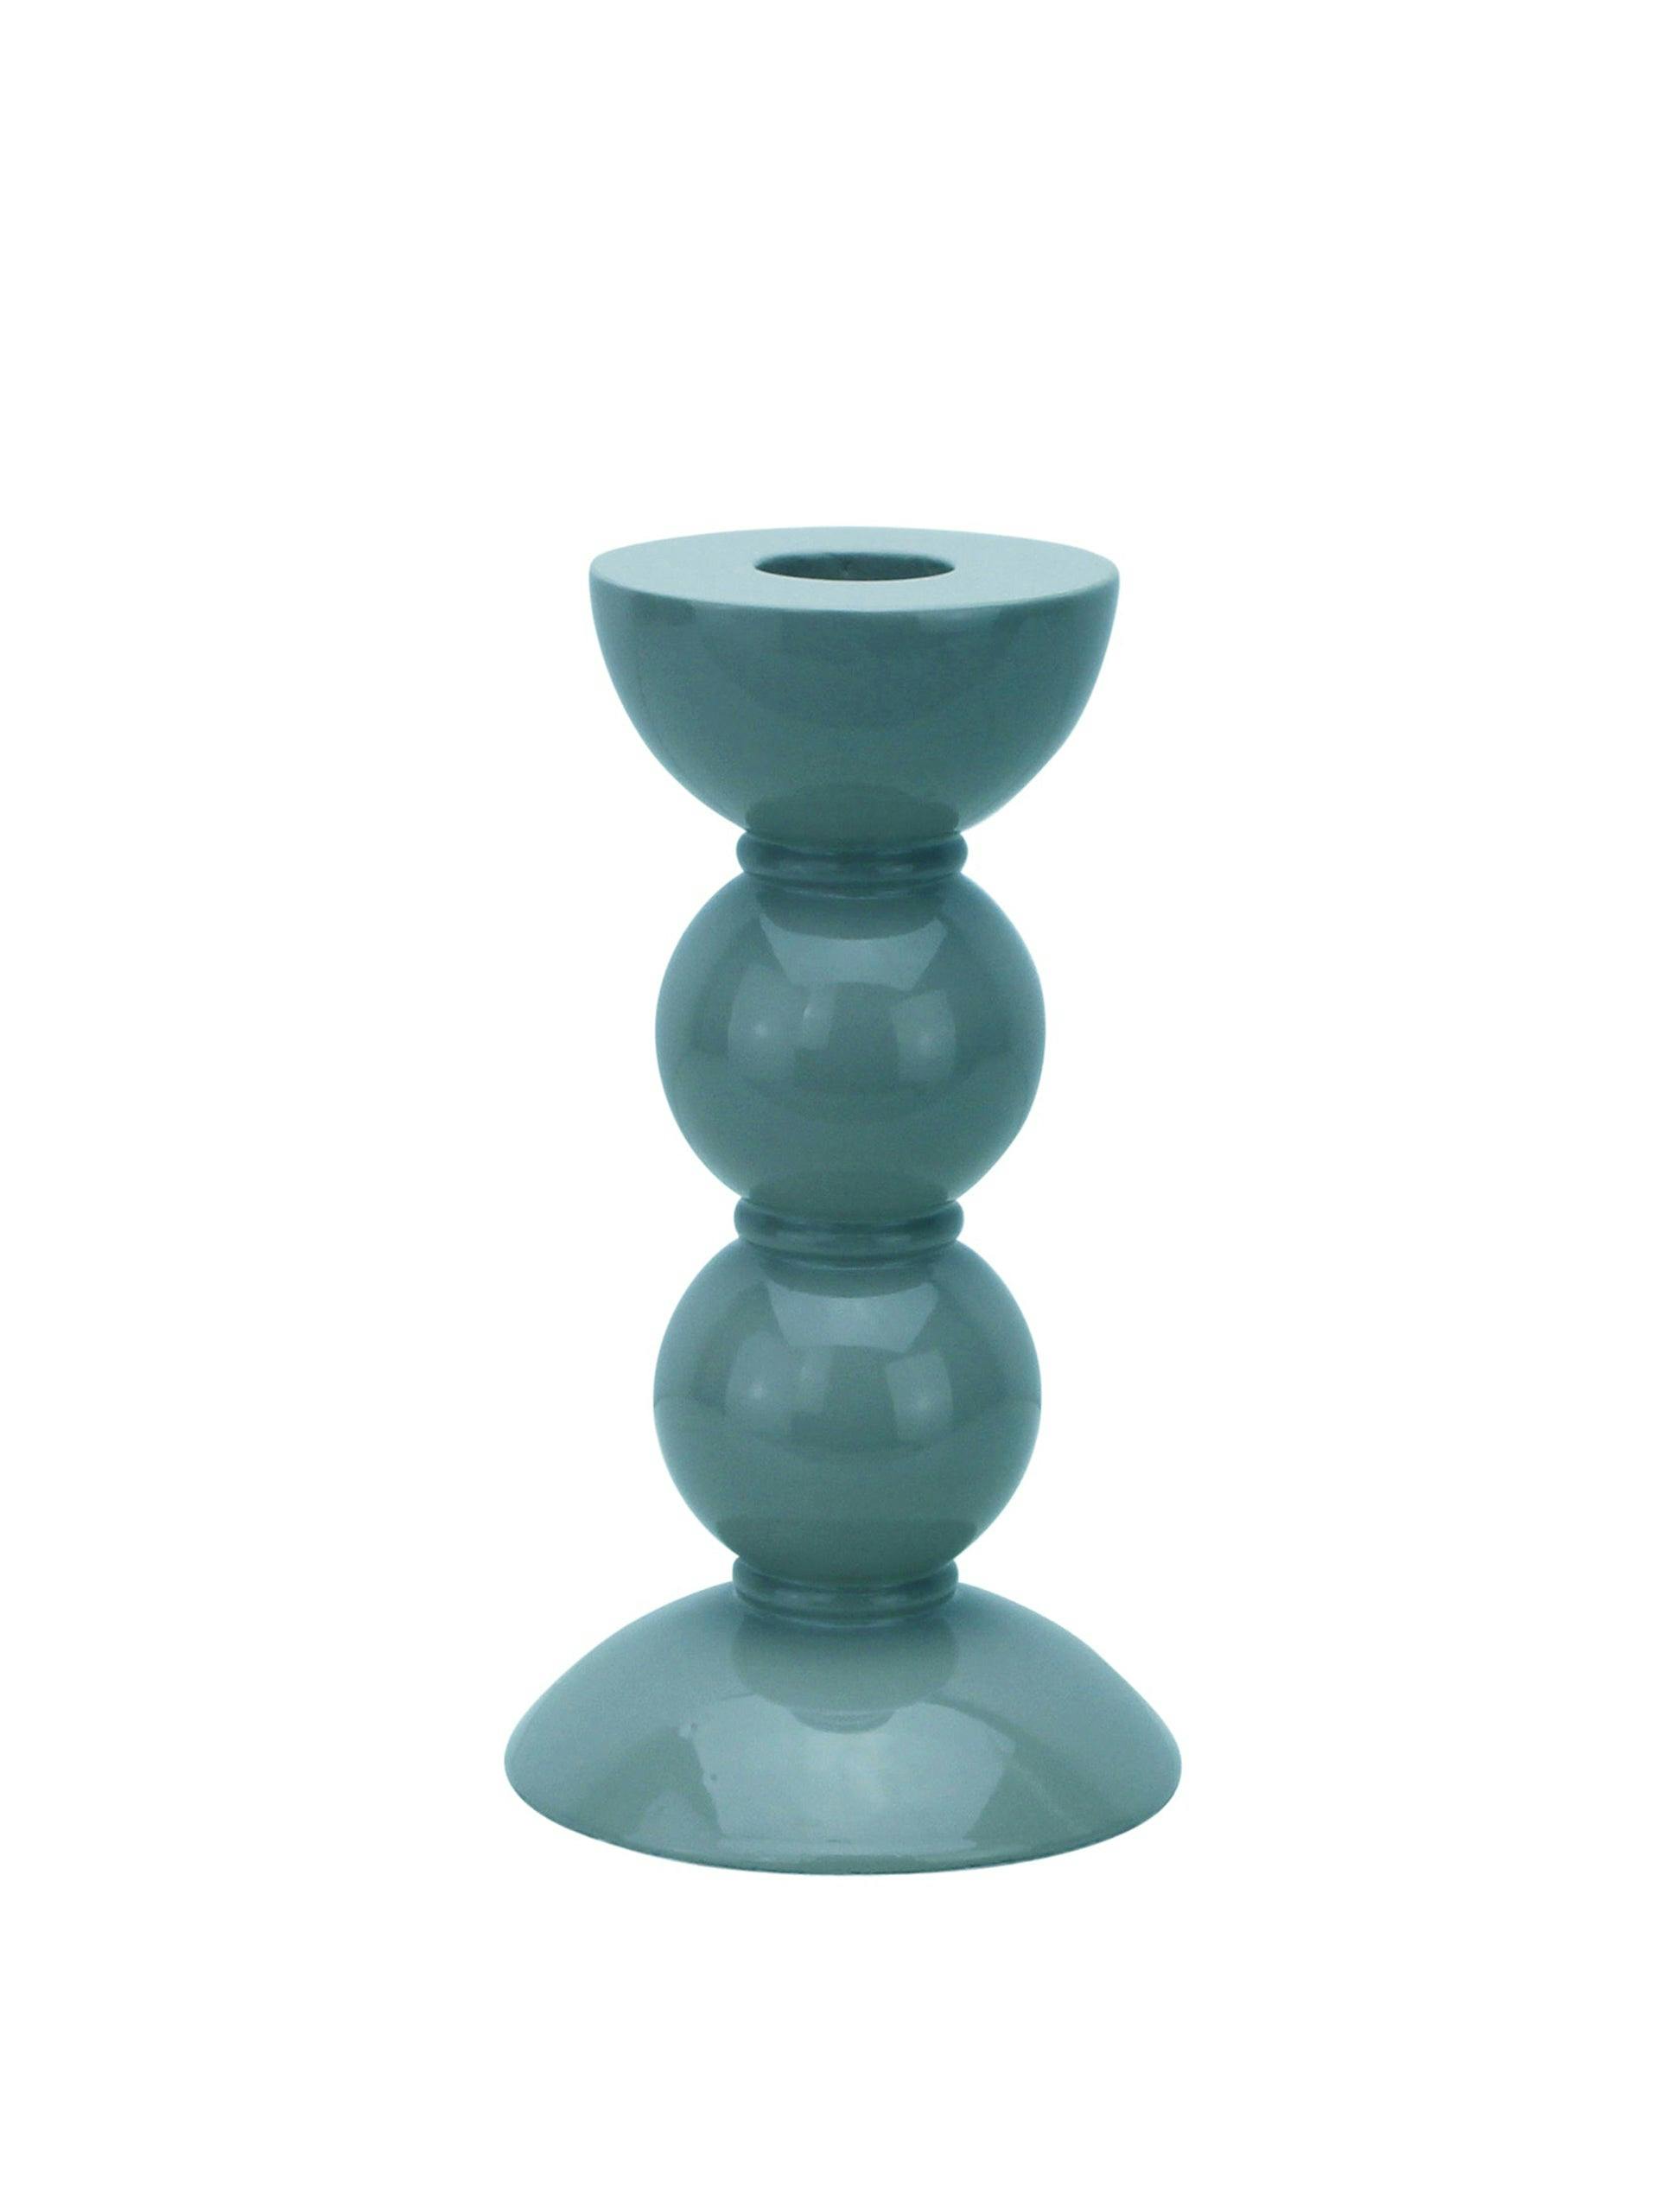 Short bobbin candlestick in Chambray blue